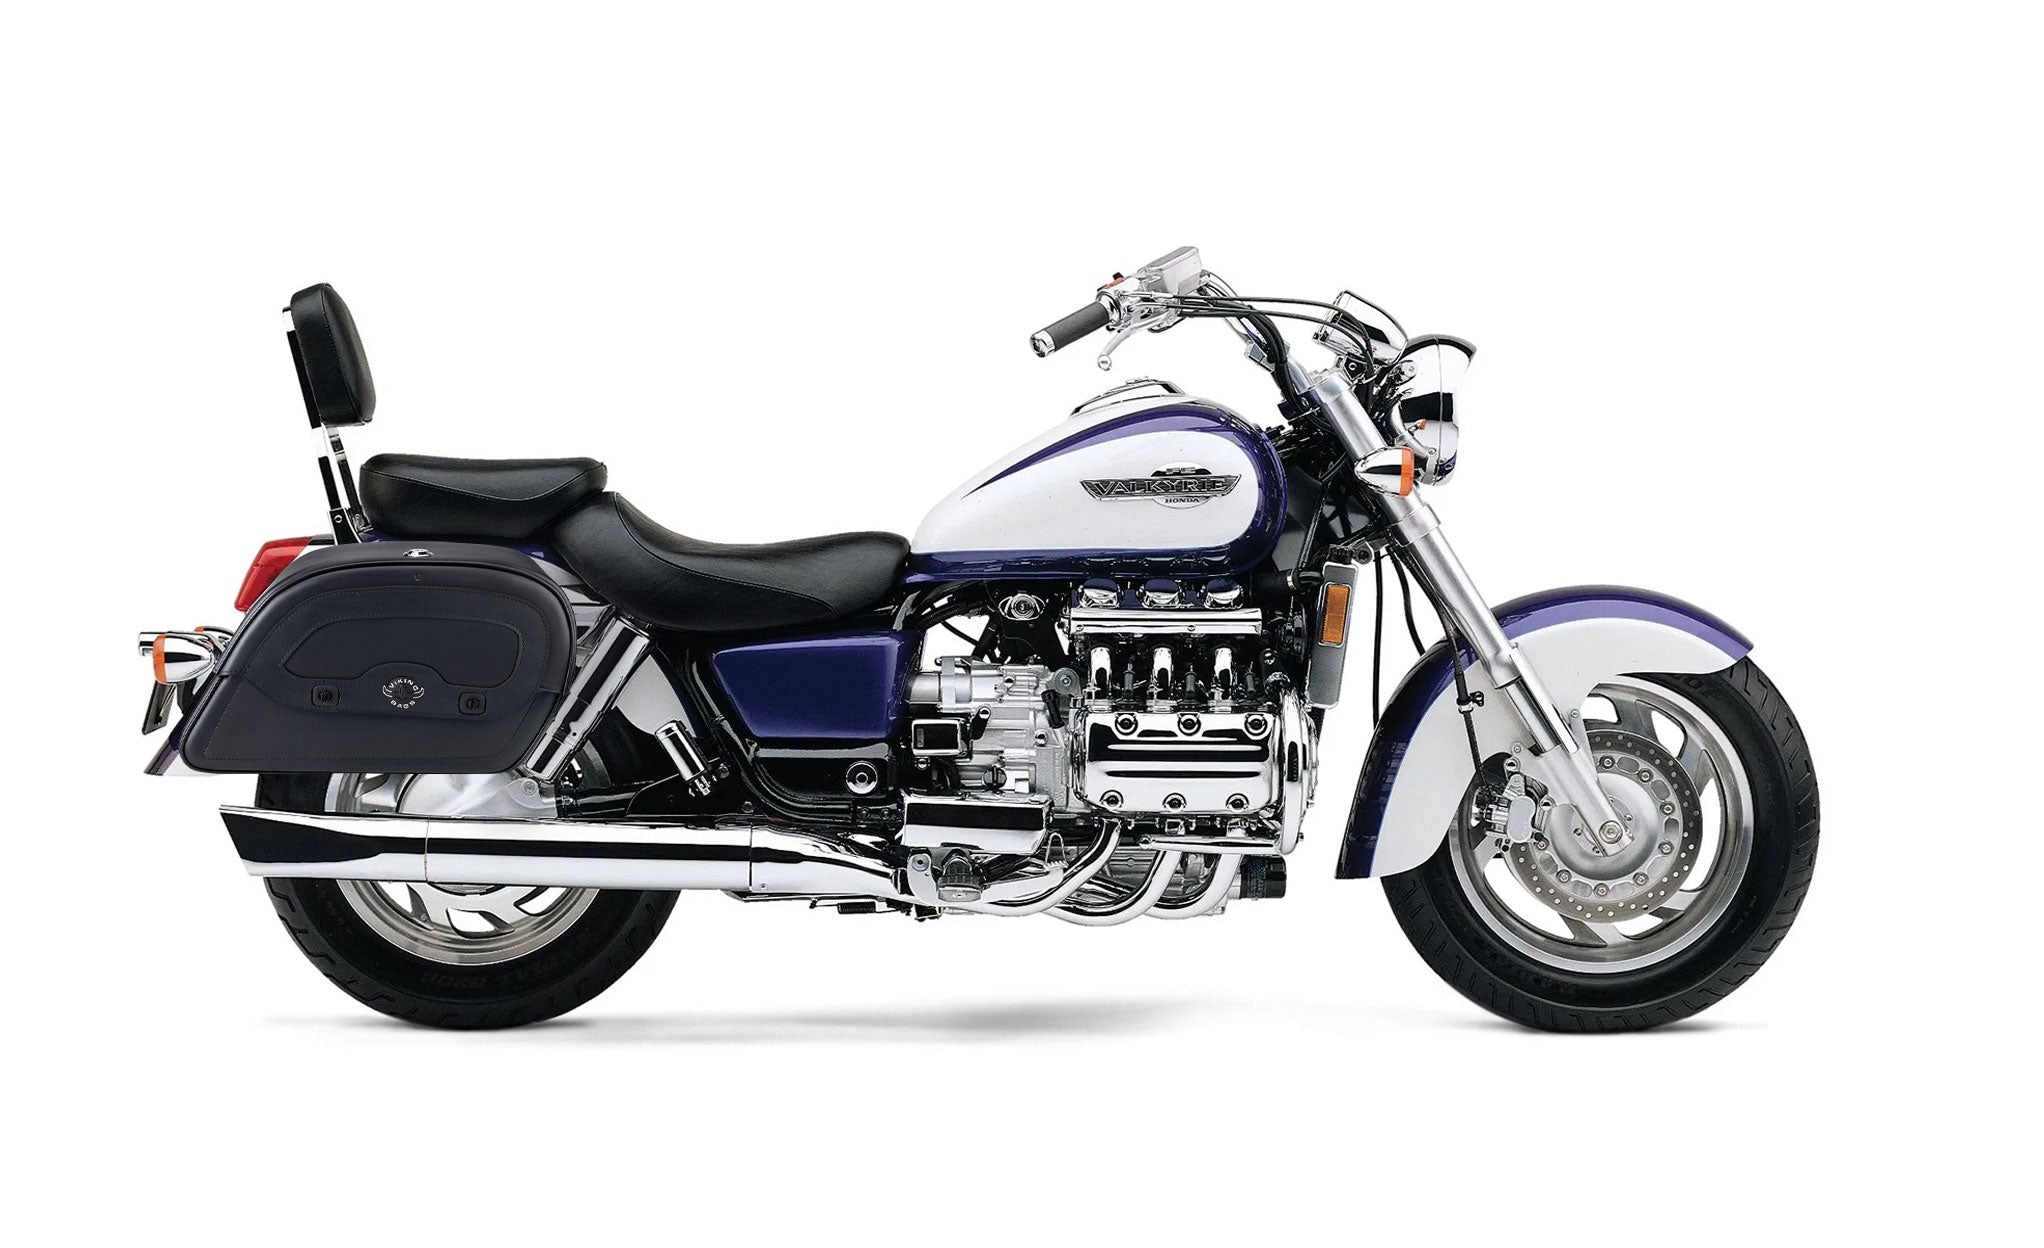 Viking Warrior Large Honda 1500 Valkyrie Interstate Leather Motorcycle Saddlebags on Bike Photo @expand